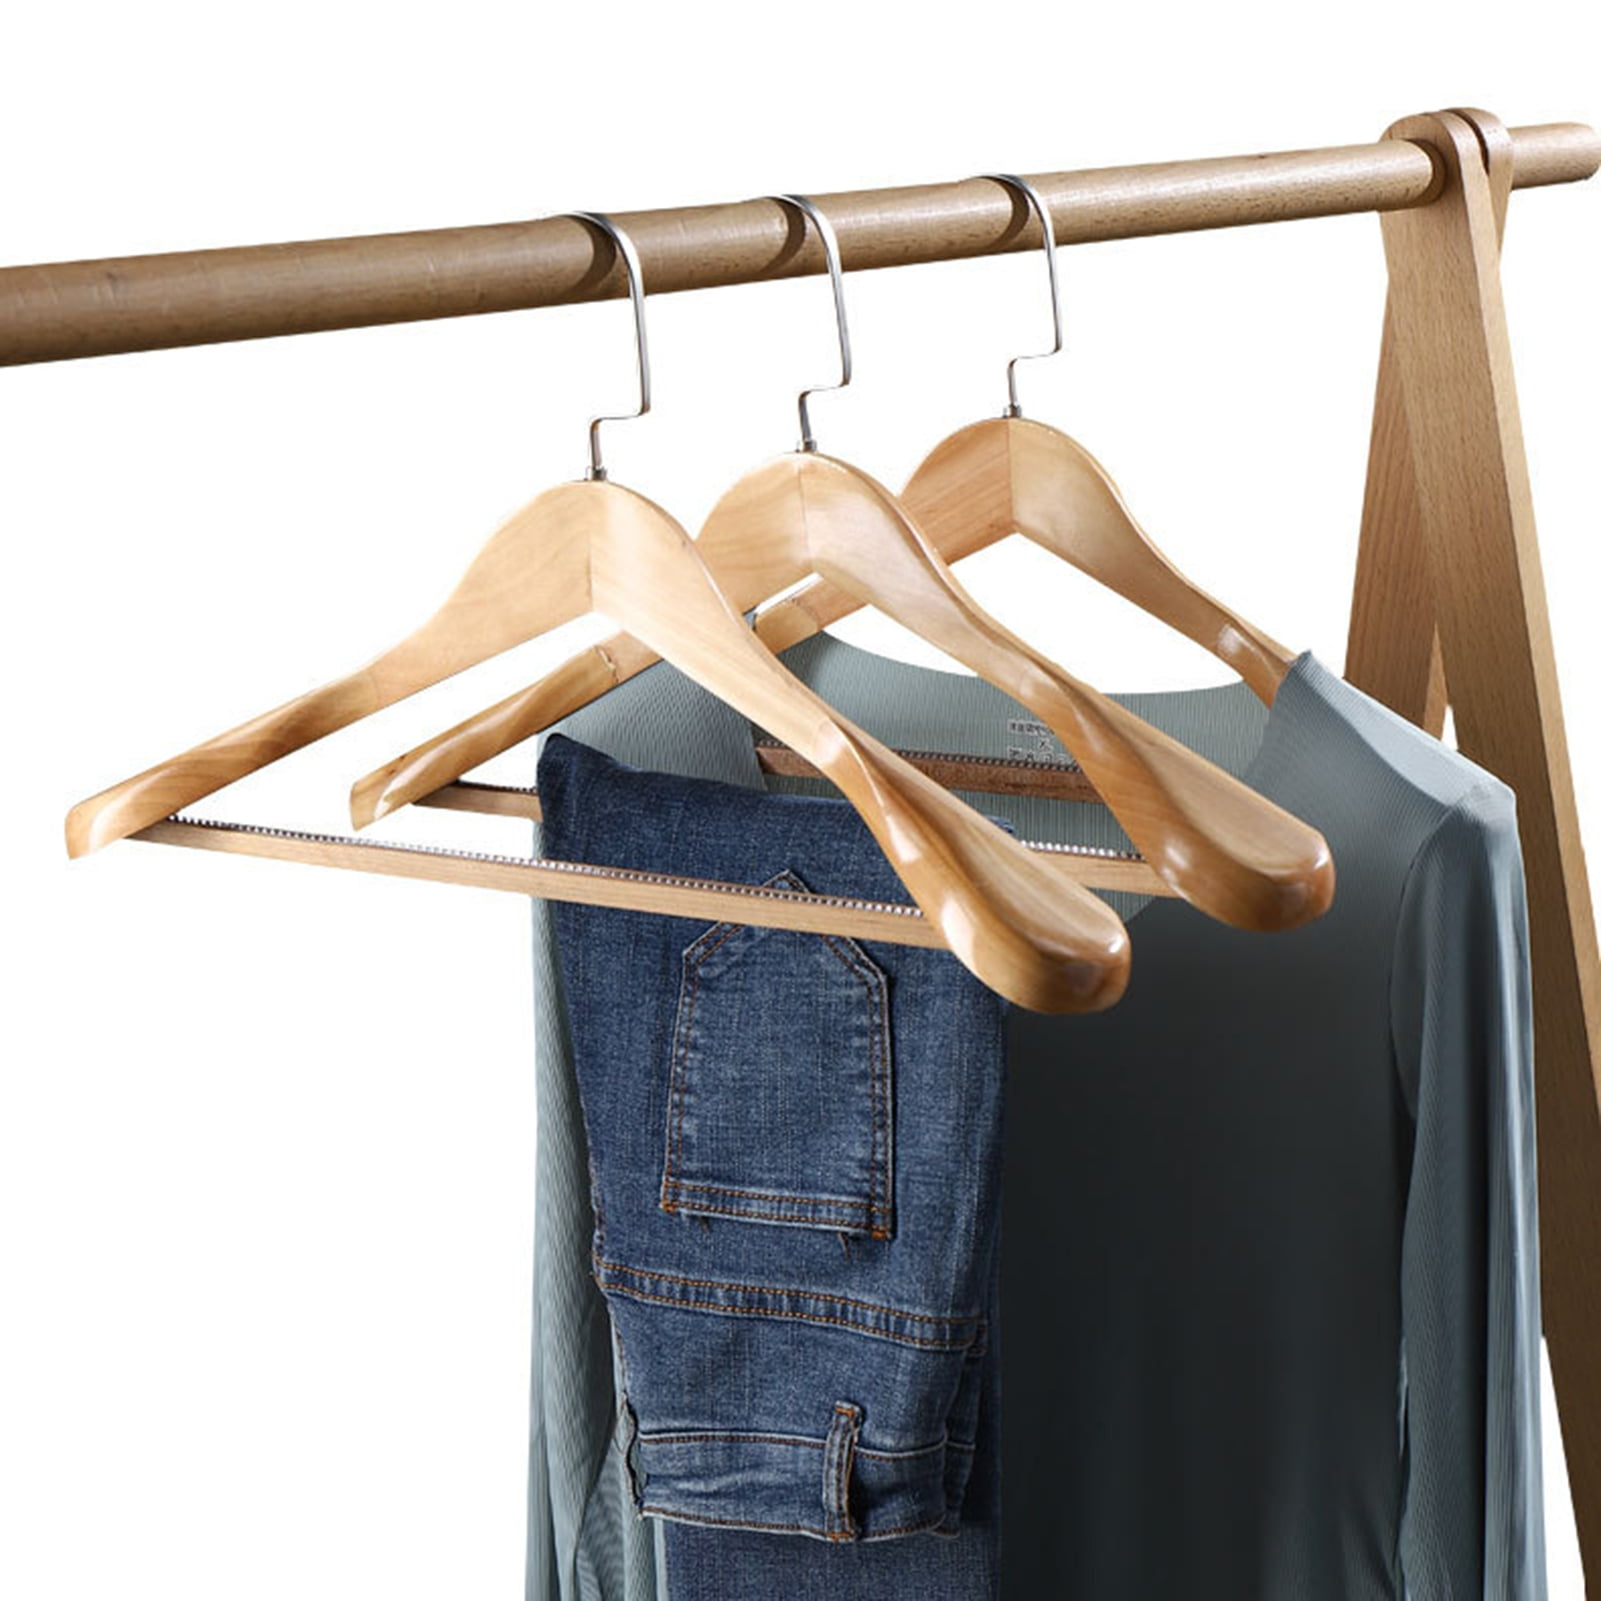 Non Slip Velvet Hangers Heavy Duty Clothes Hangers - Tan